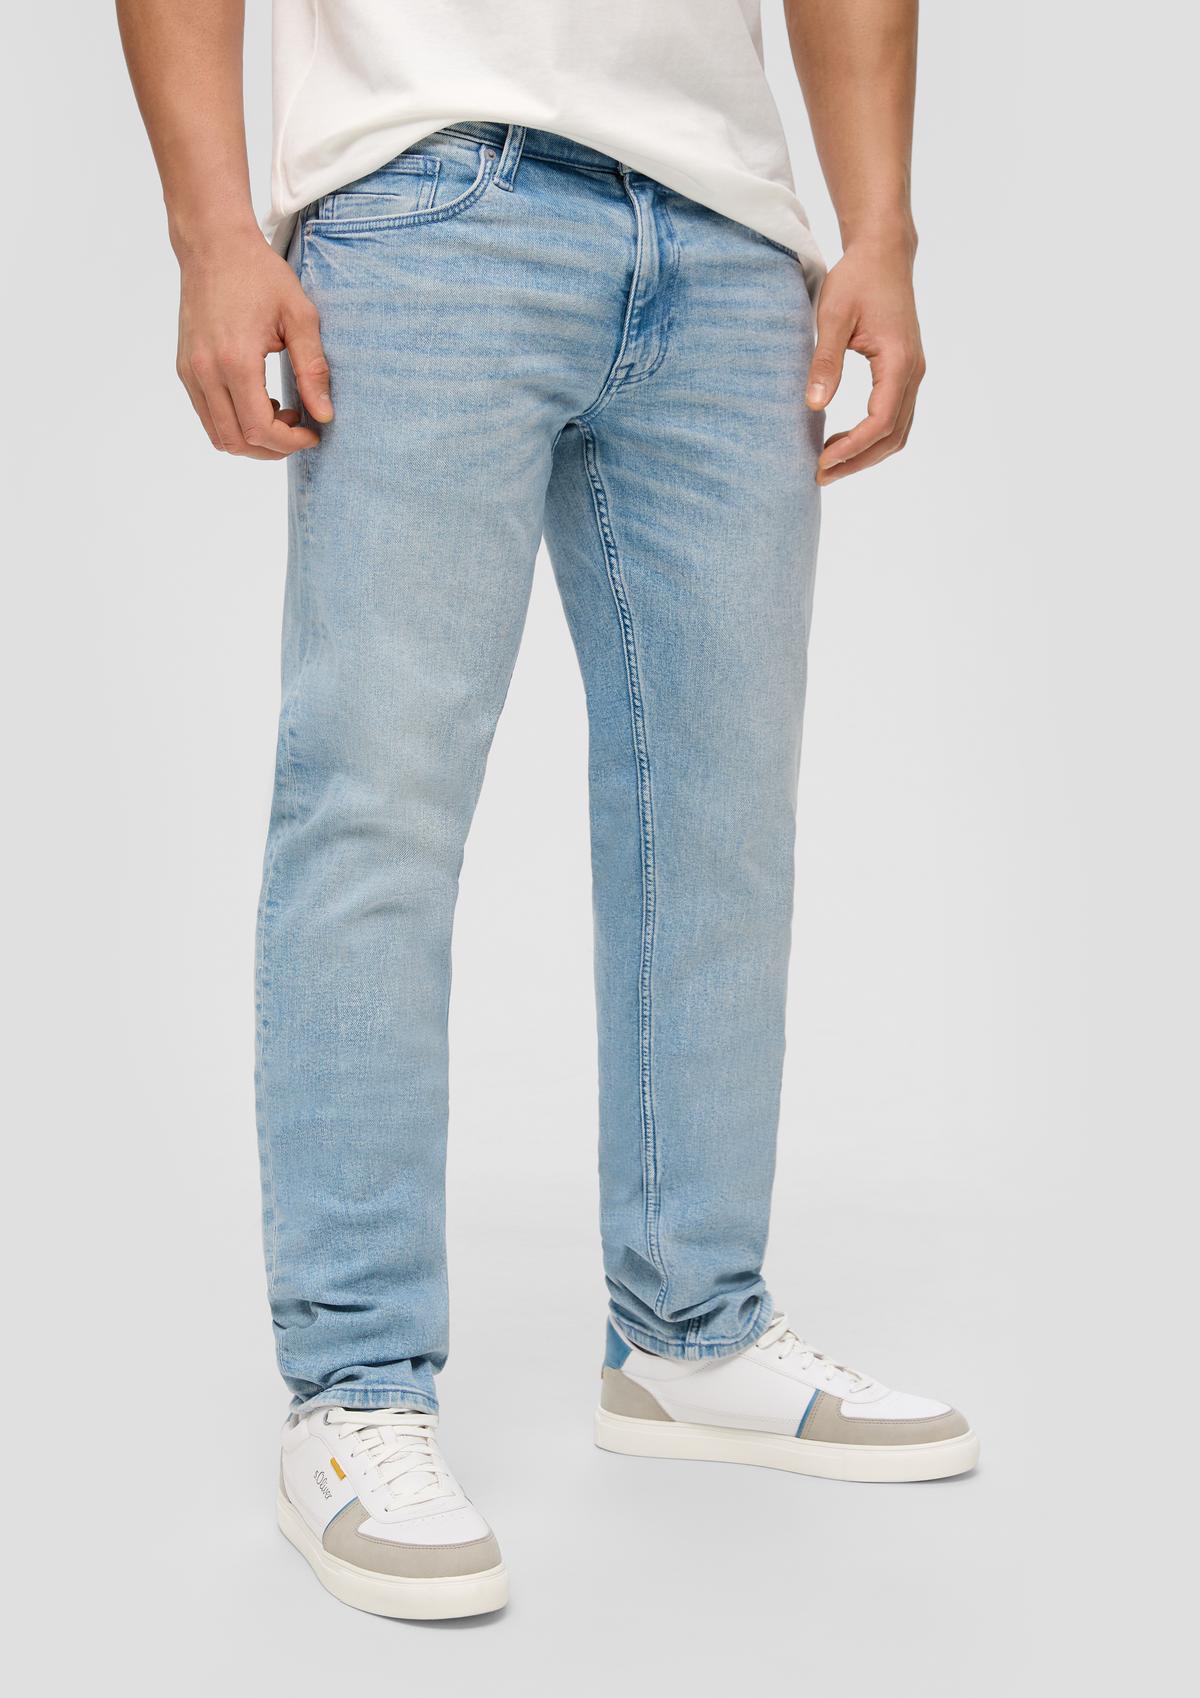 s.Oliver York jeans / regular fit / mid rise / straight leg